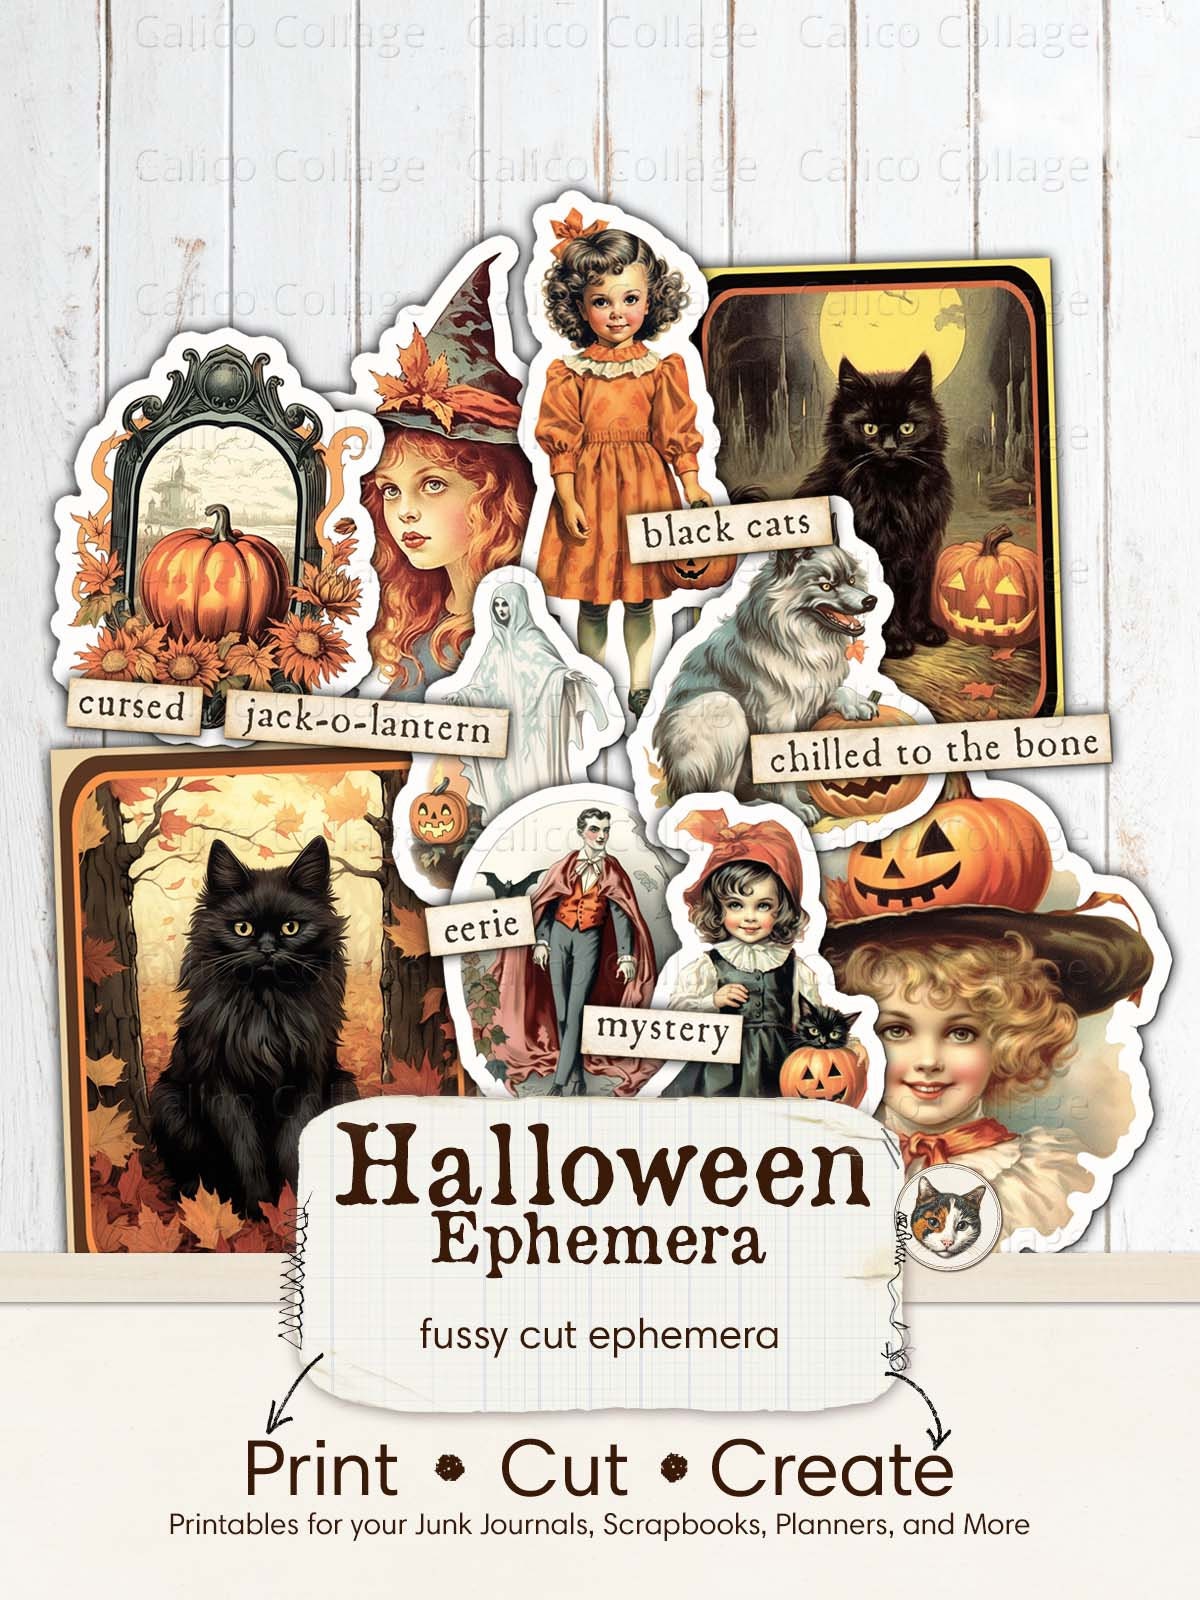 Cut & Create Classic Halloween Ephemera Book by Calico Collage